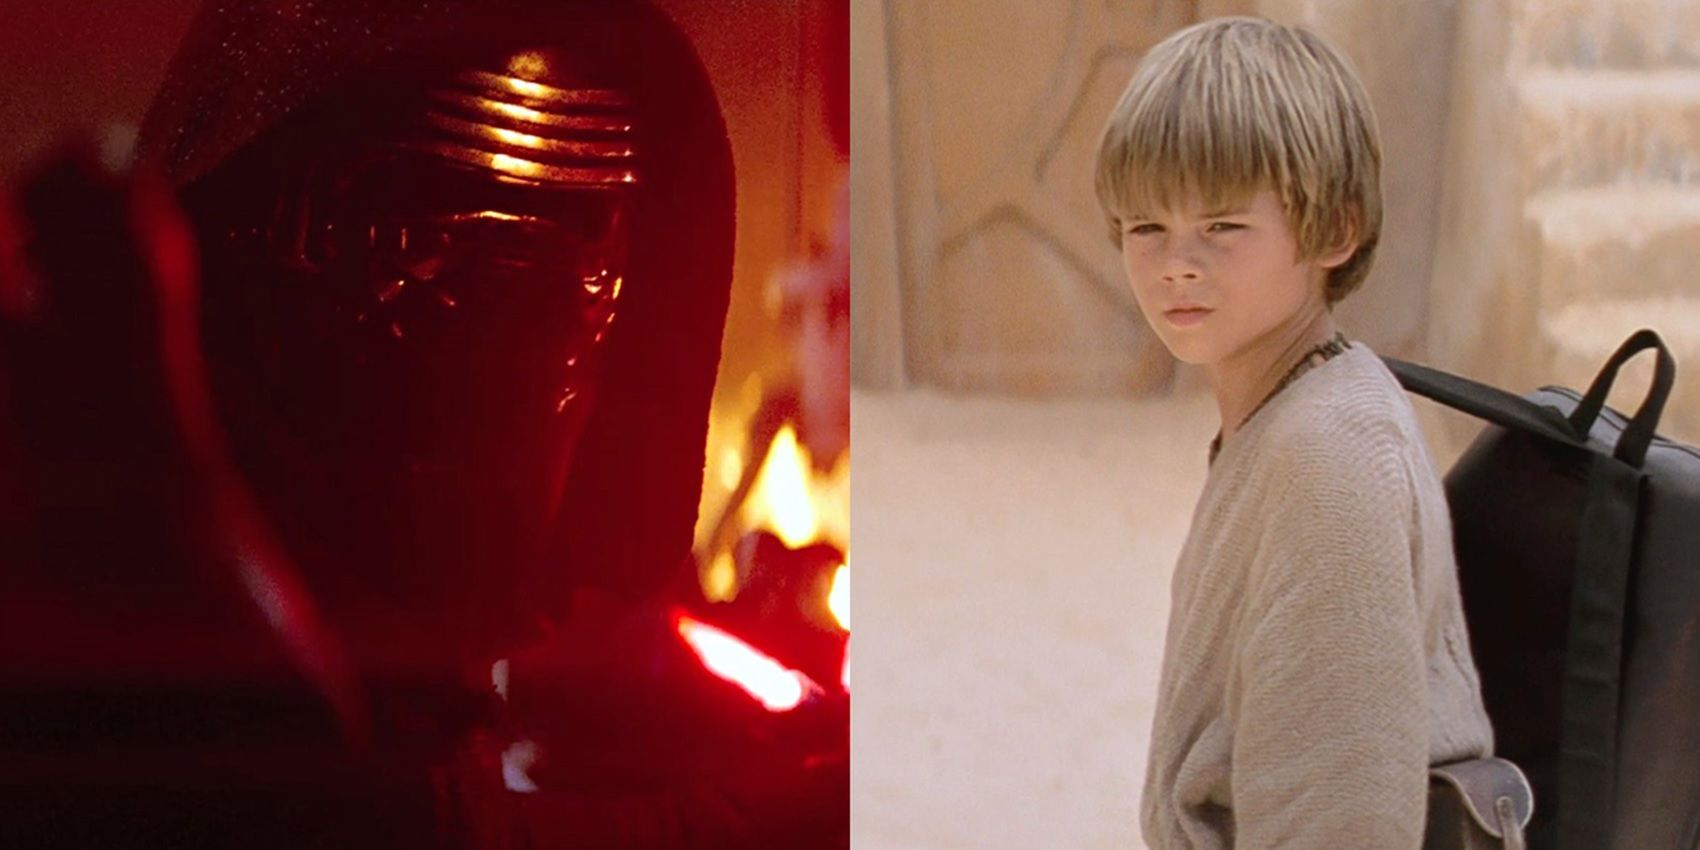 Kylo Ren in The Force Awakens and Anakin Skywalker in The Phantom Menace